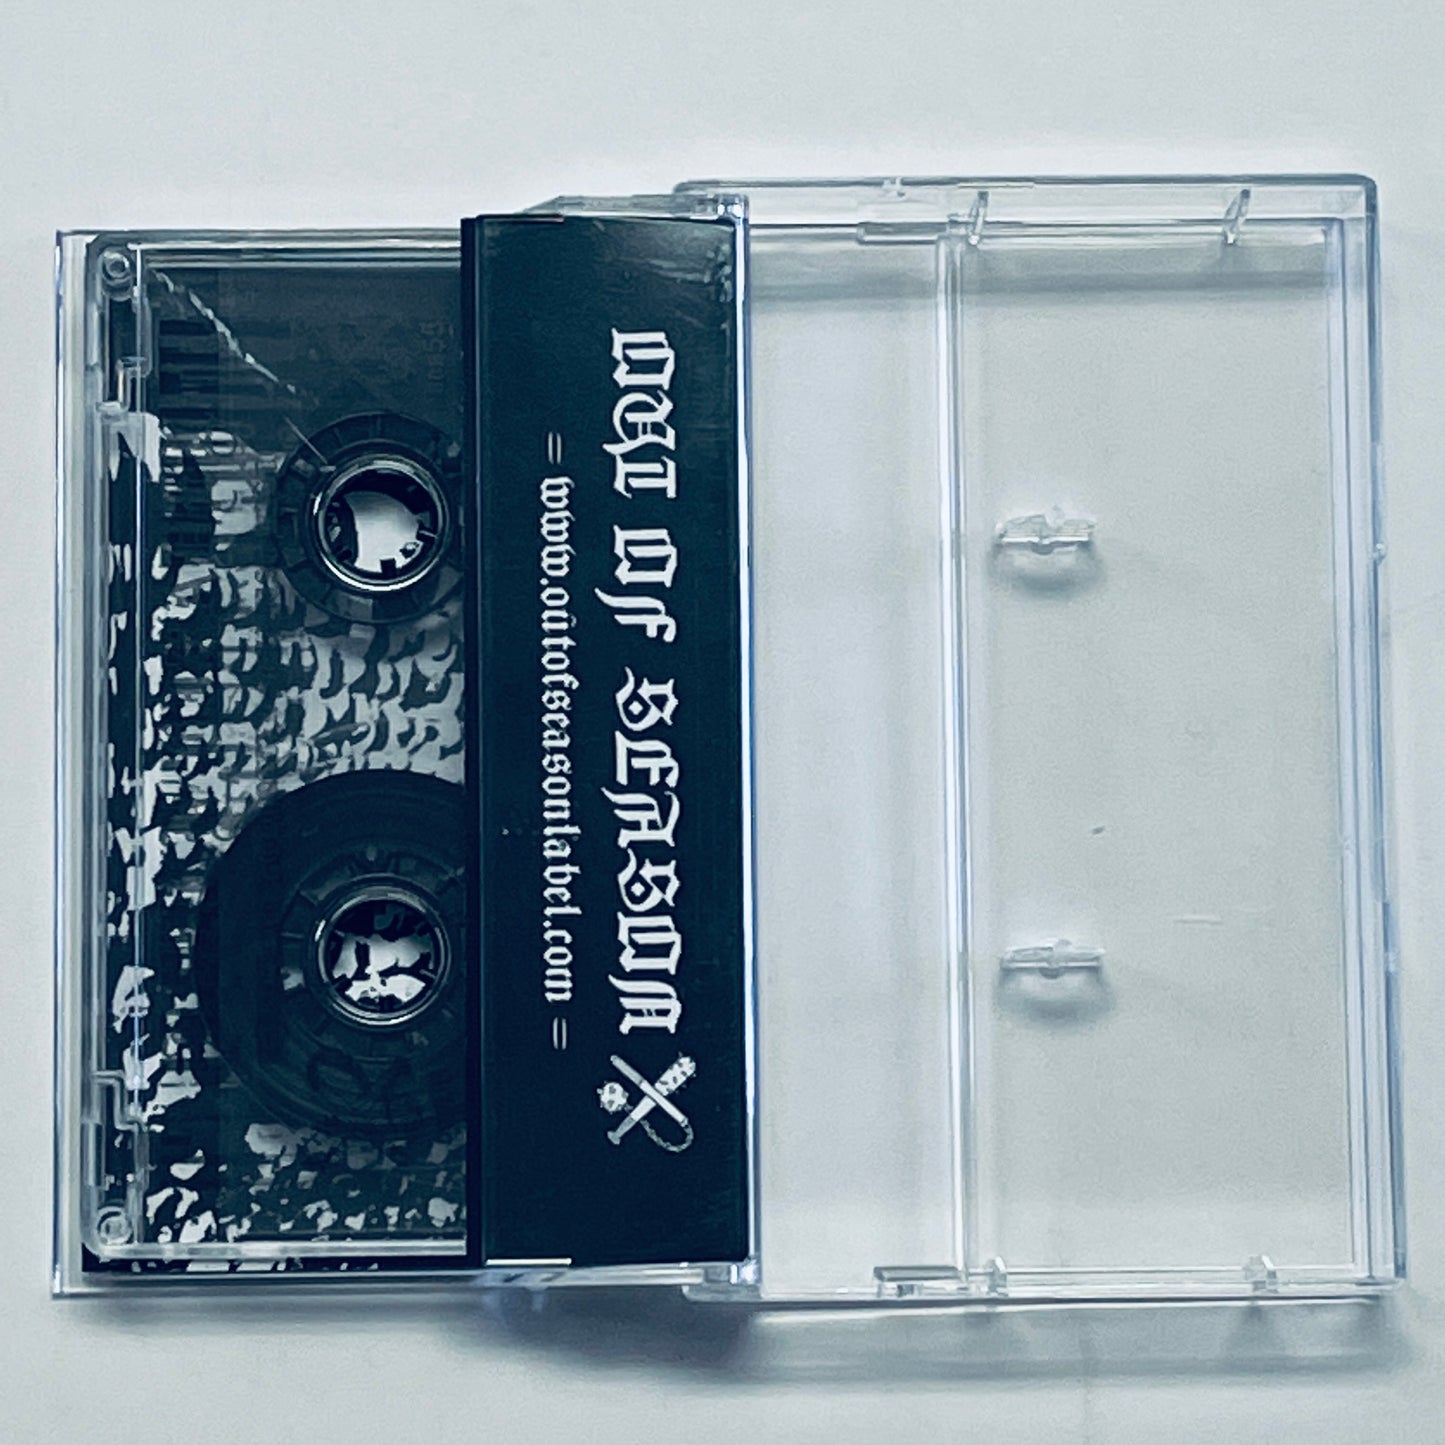 Black Citadel – Relics Of Forgotten Satanist Wisdom cassette tape (used)